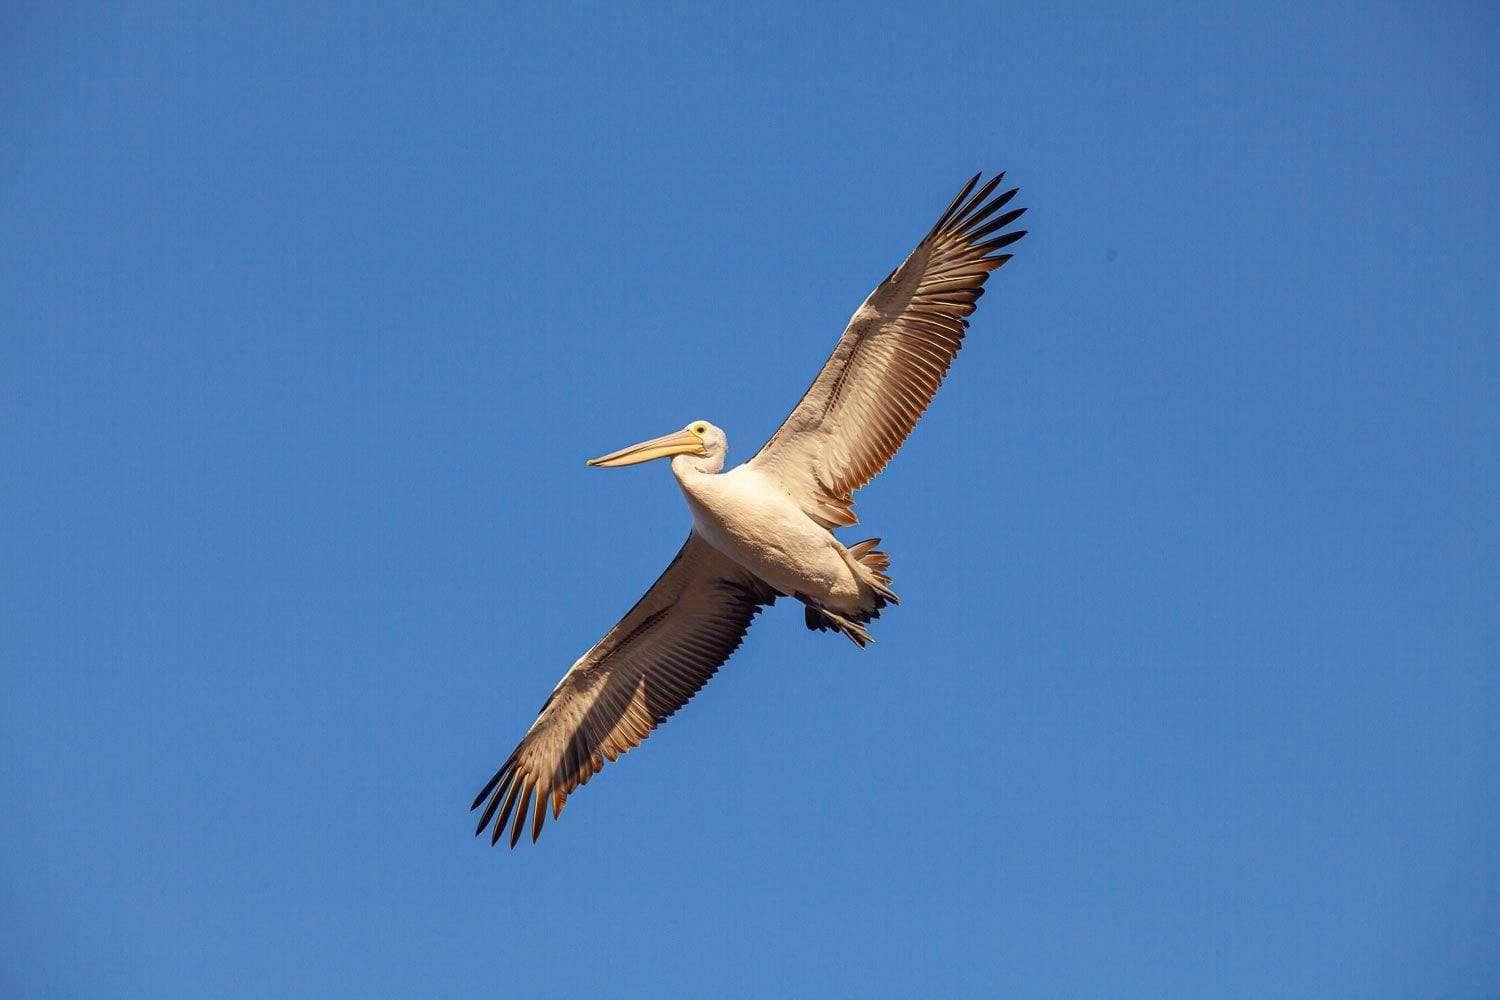 A giant bird flying high in the air, Jumbo Jet (Pelican) - Kangaroo Island SA